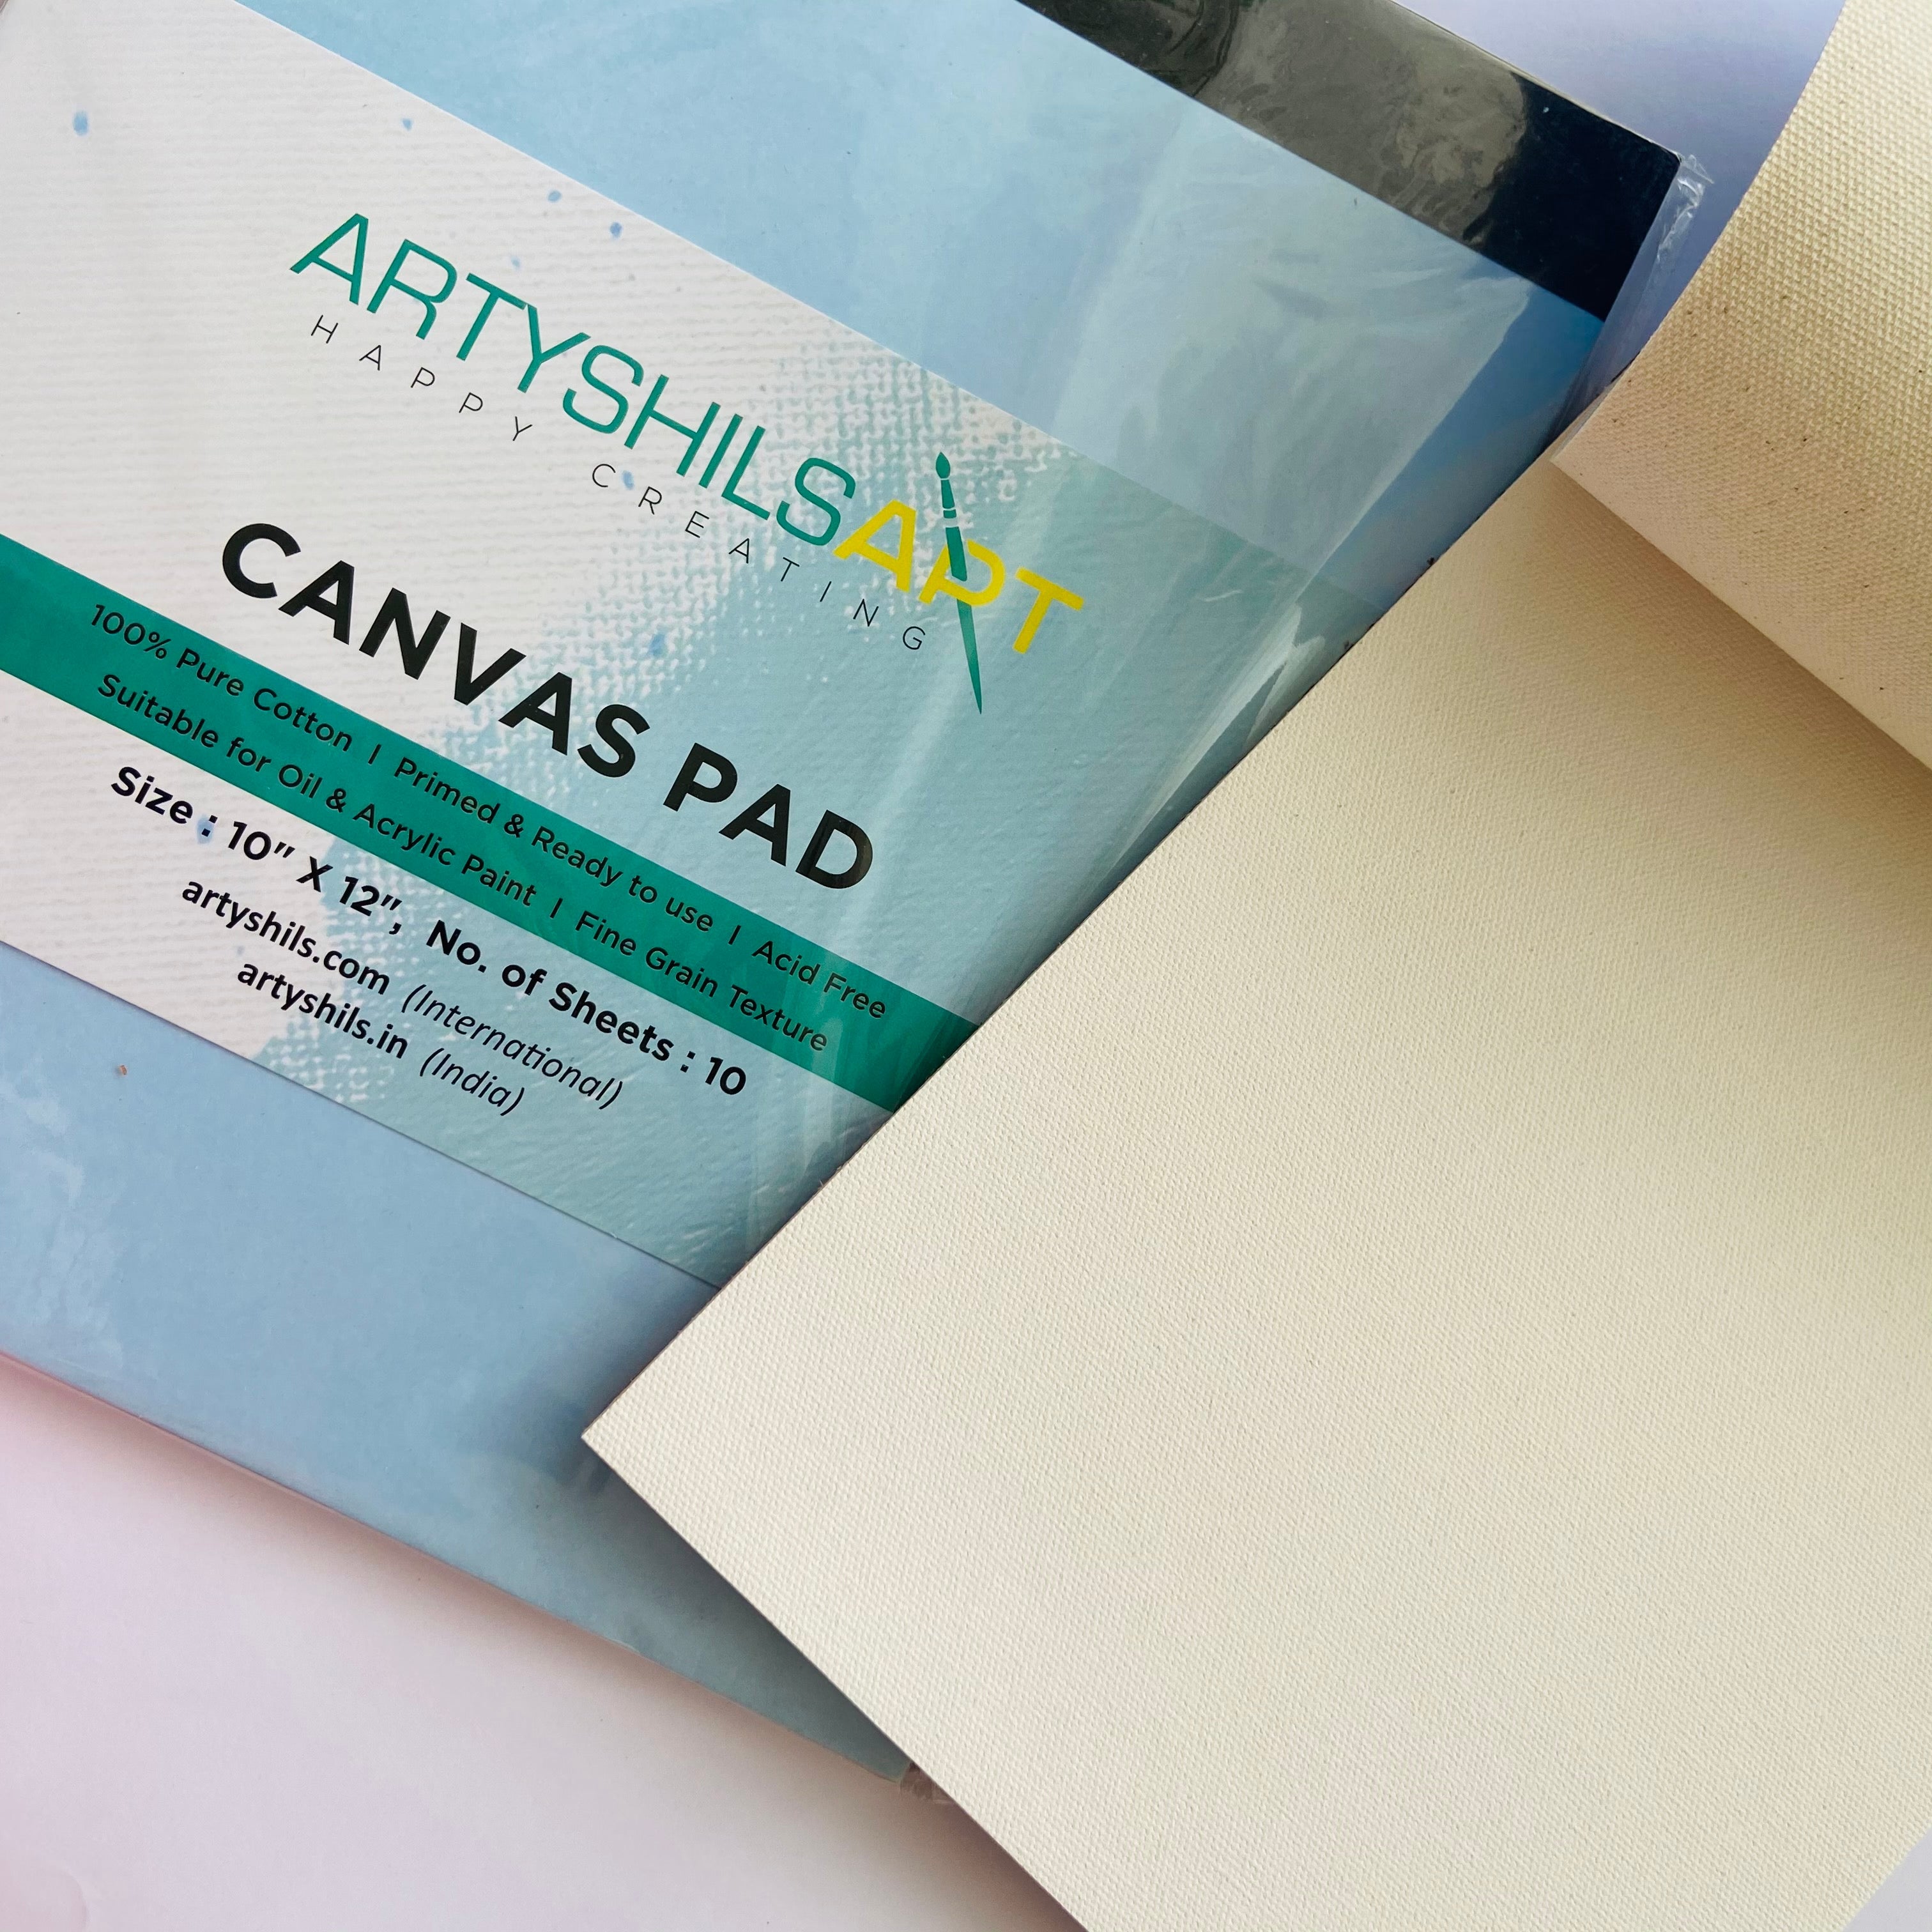 10/12” - 1 Medium size canvas pad